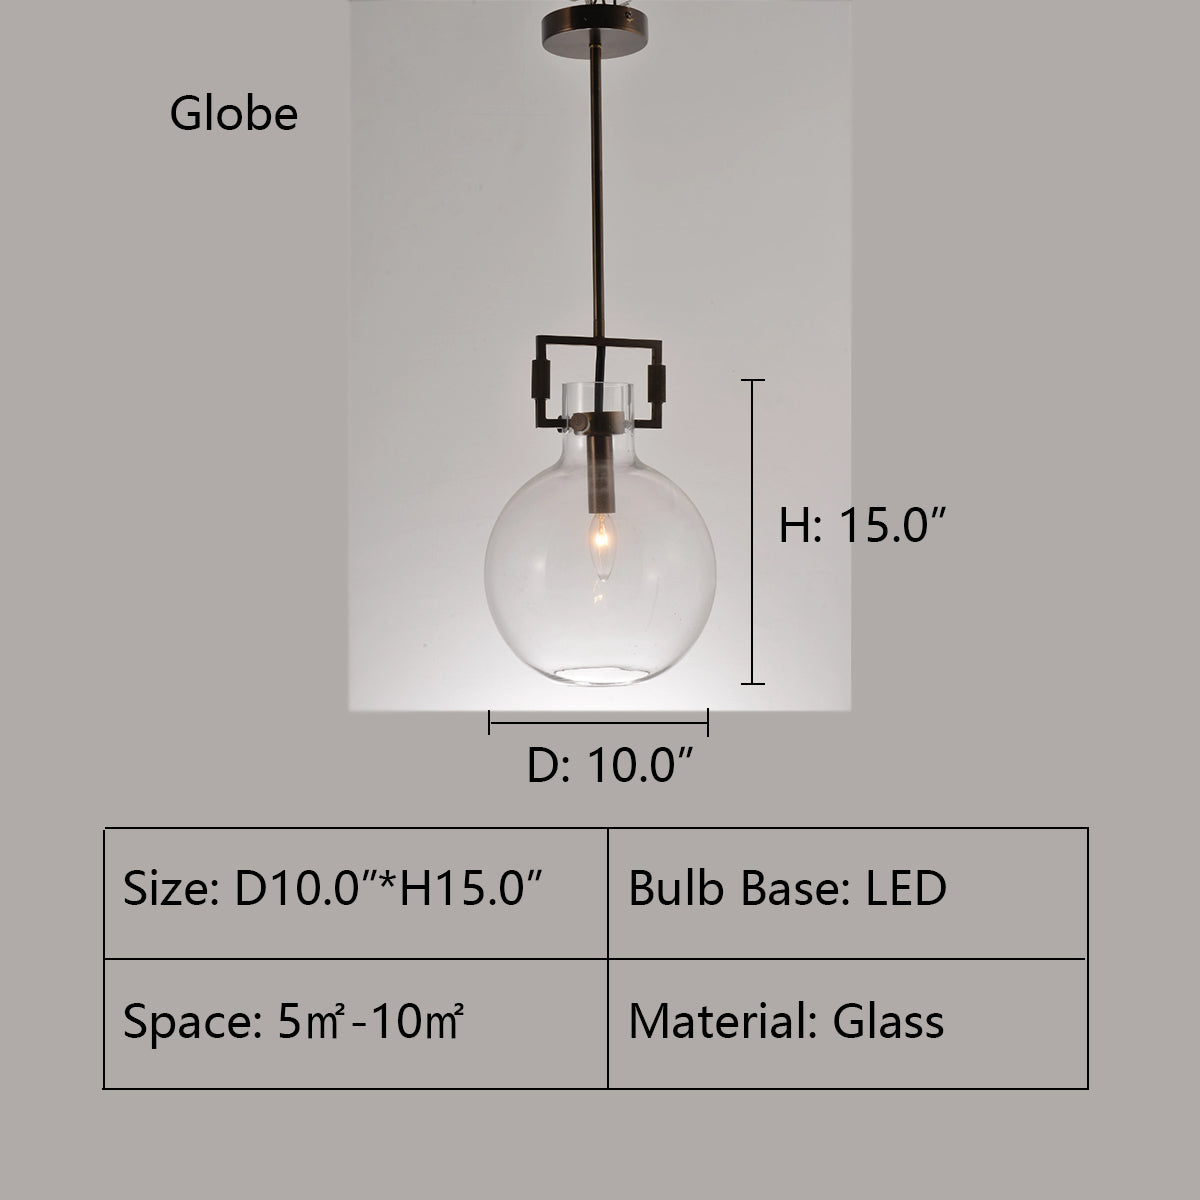 Globe: D10.0"*H15.0" MODULE GLASS PENDANT LIGHT,pendant,glass,black iron,metal,ceiling,kitchen island,bar,dining table,long table,dining bar,kitchen bar,island,modern light,glass light